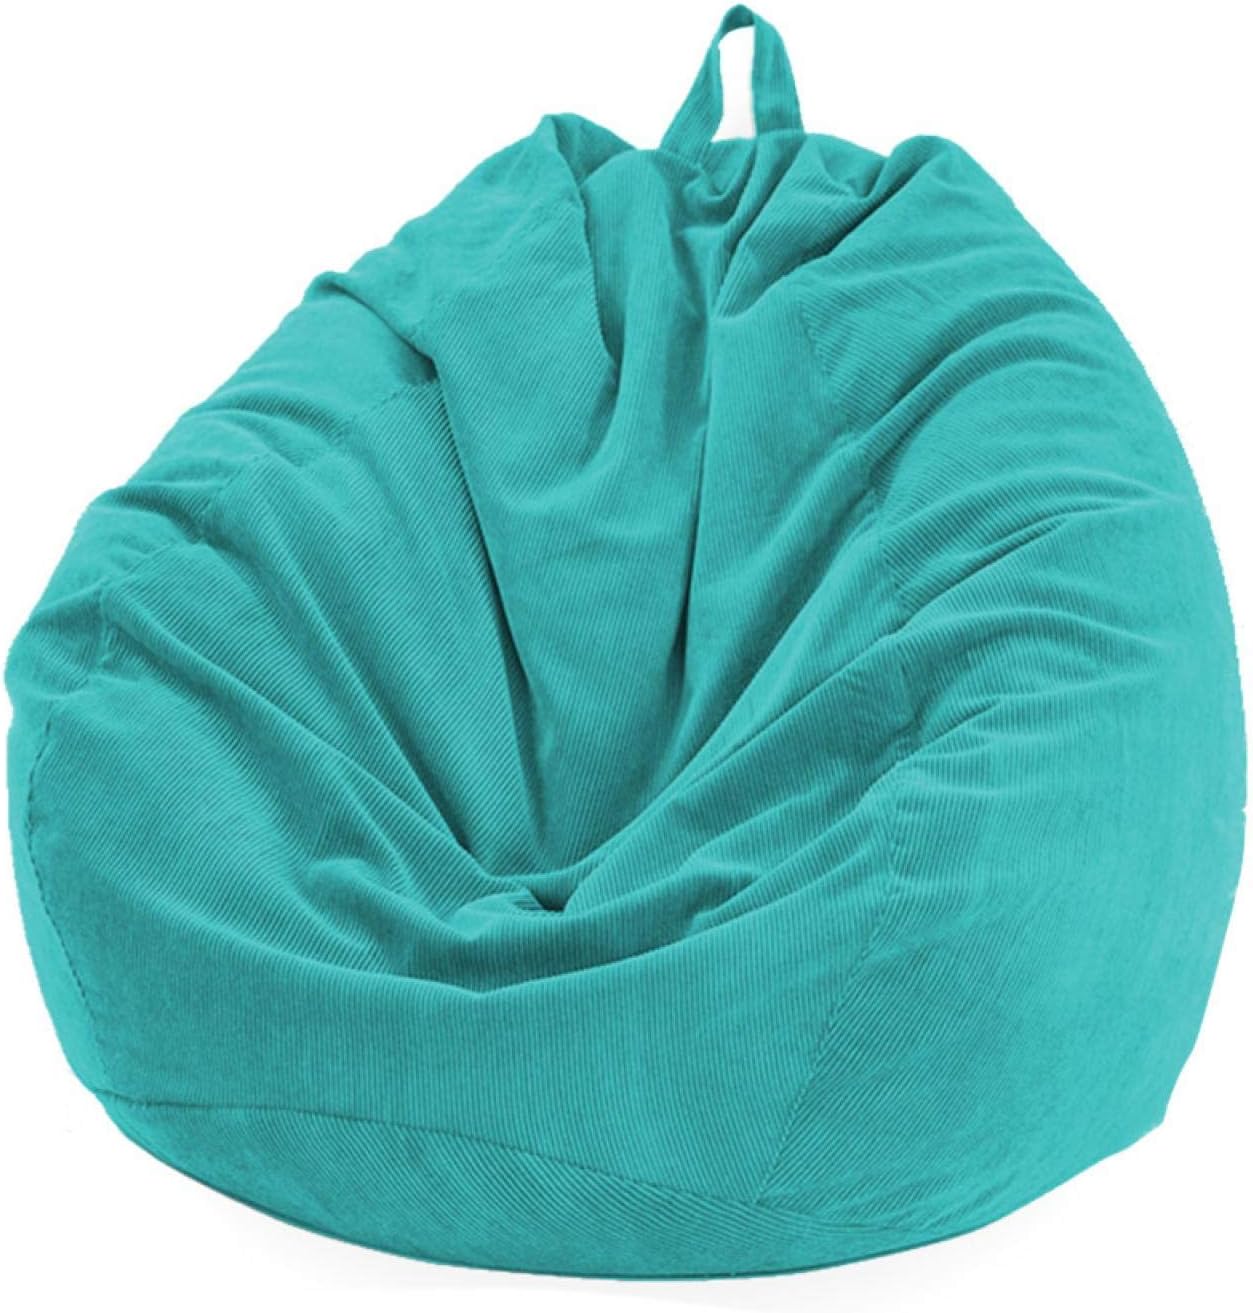 Generic CALIDAKA Stuffed Animal Storage Bean Bag Chair Slipcover (No Beans)  for Kids and Adults.Soft Premium Corduroy Stuffable Beanbag